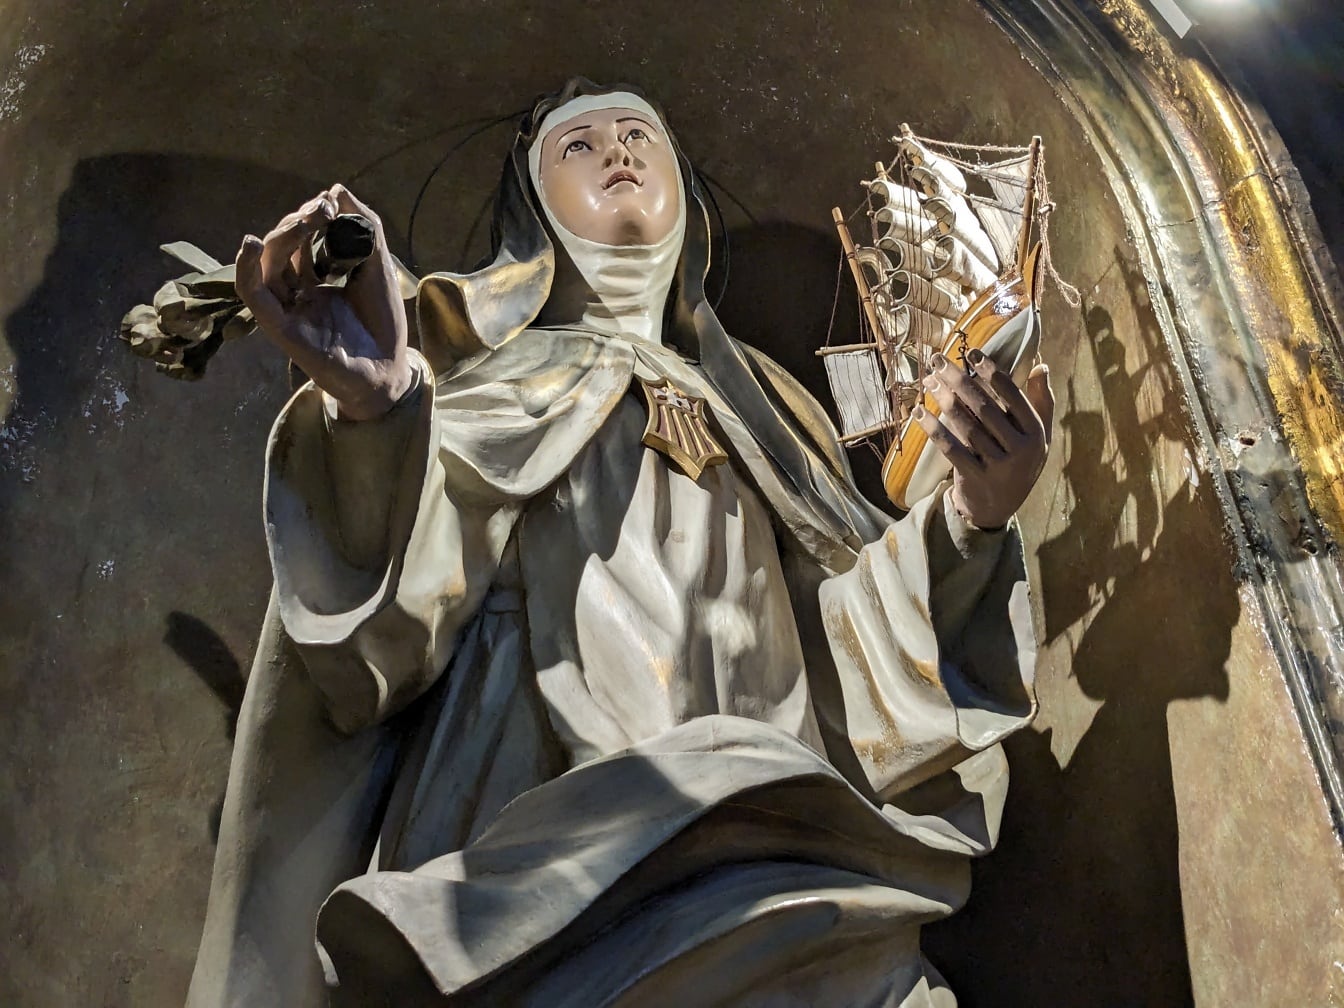 Katolsk staty av en nunna som håller ett skepp